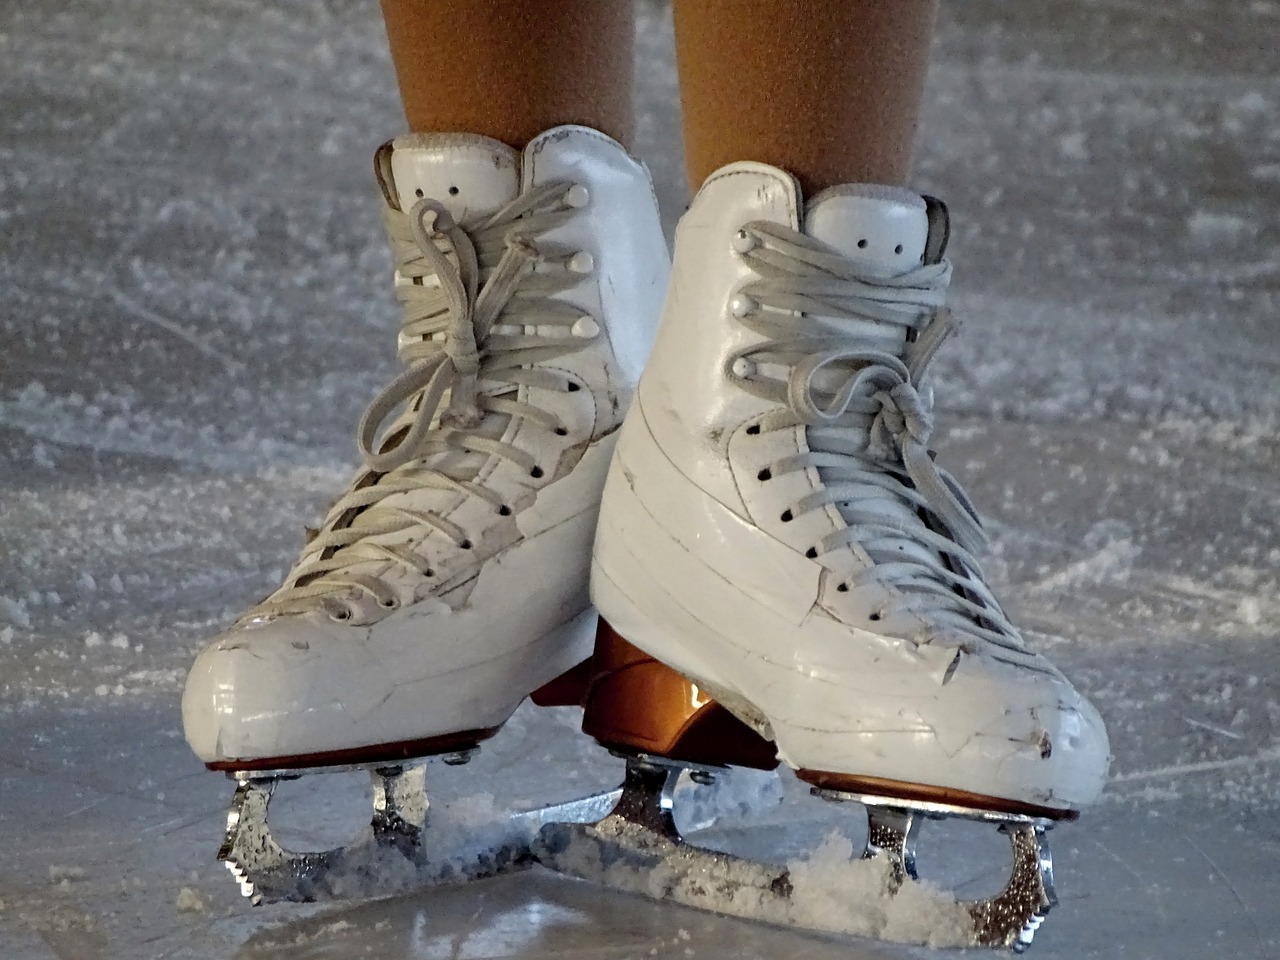 A pair of ice skates.